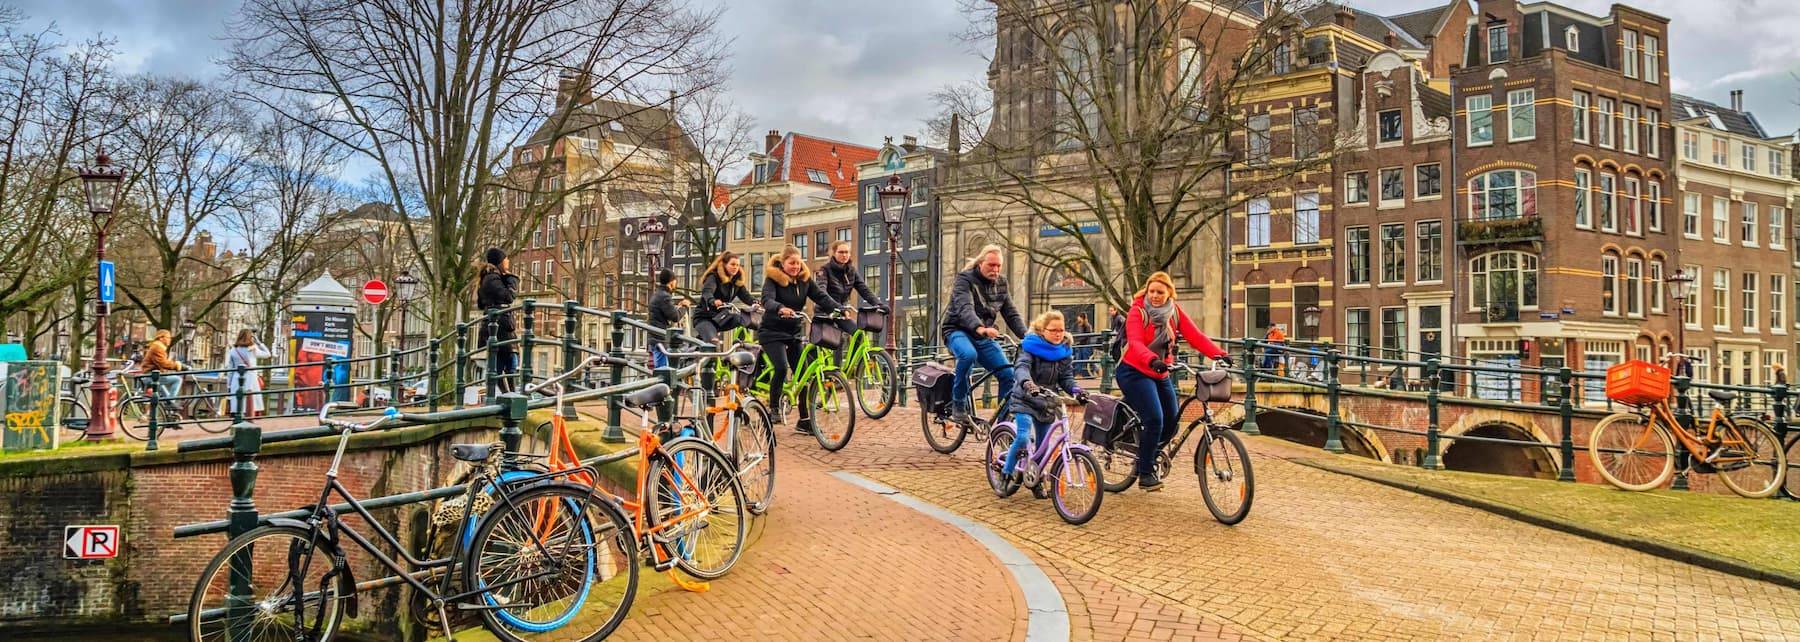 Amsterdam Bike Tour Small Groups